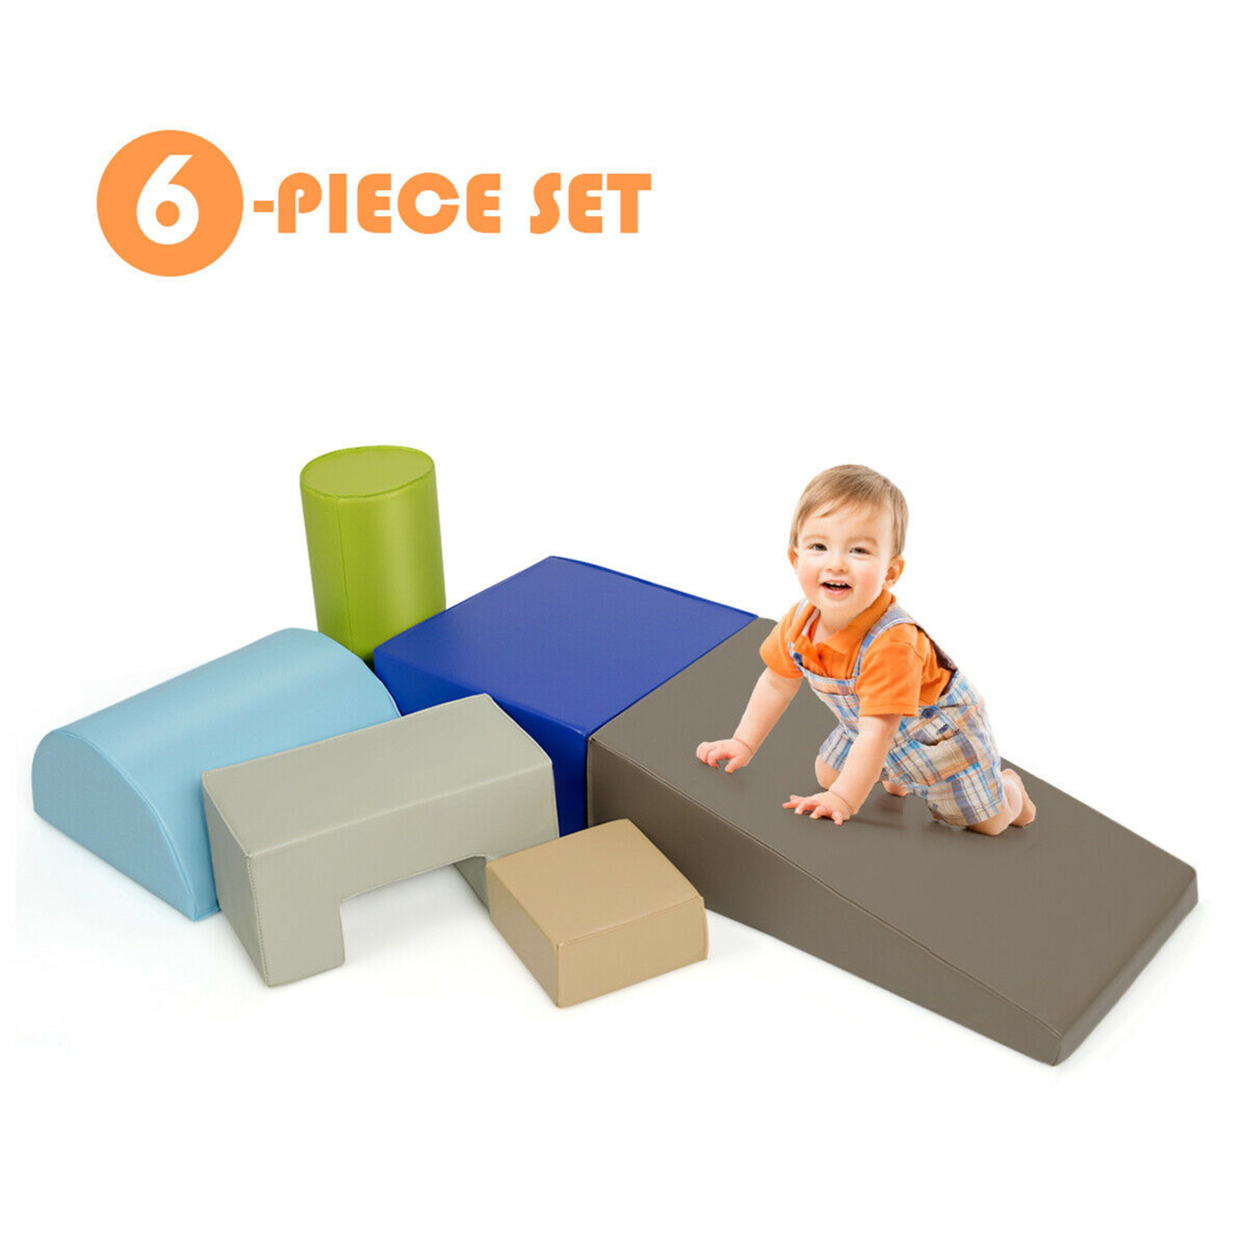 6 Piece Climb Crawl Play Set Indoor Kids Baby Toddler Safe Soft Foam Blocks Toys